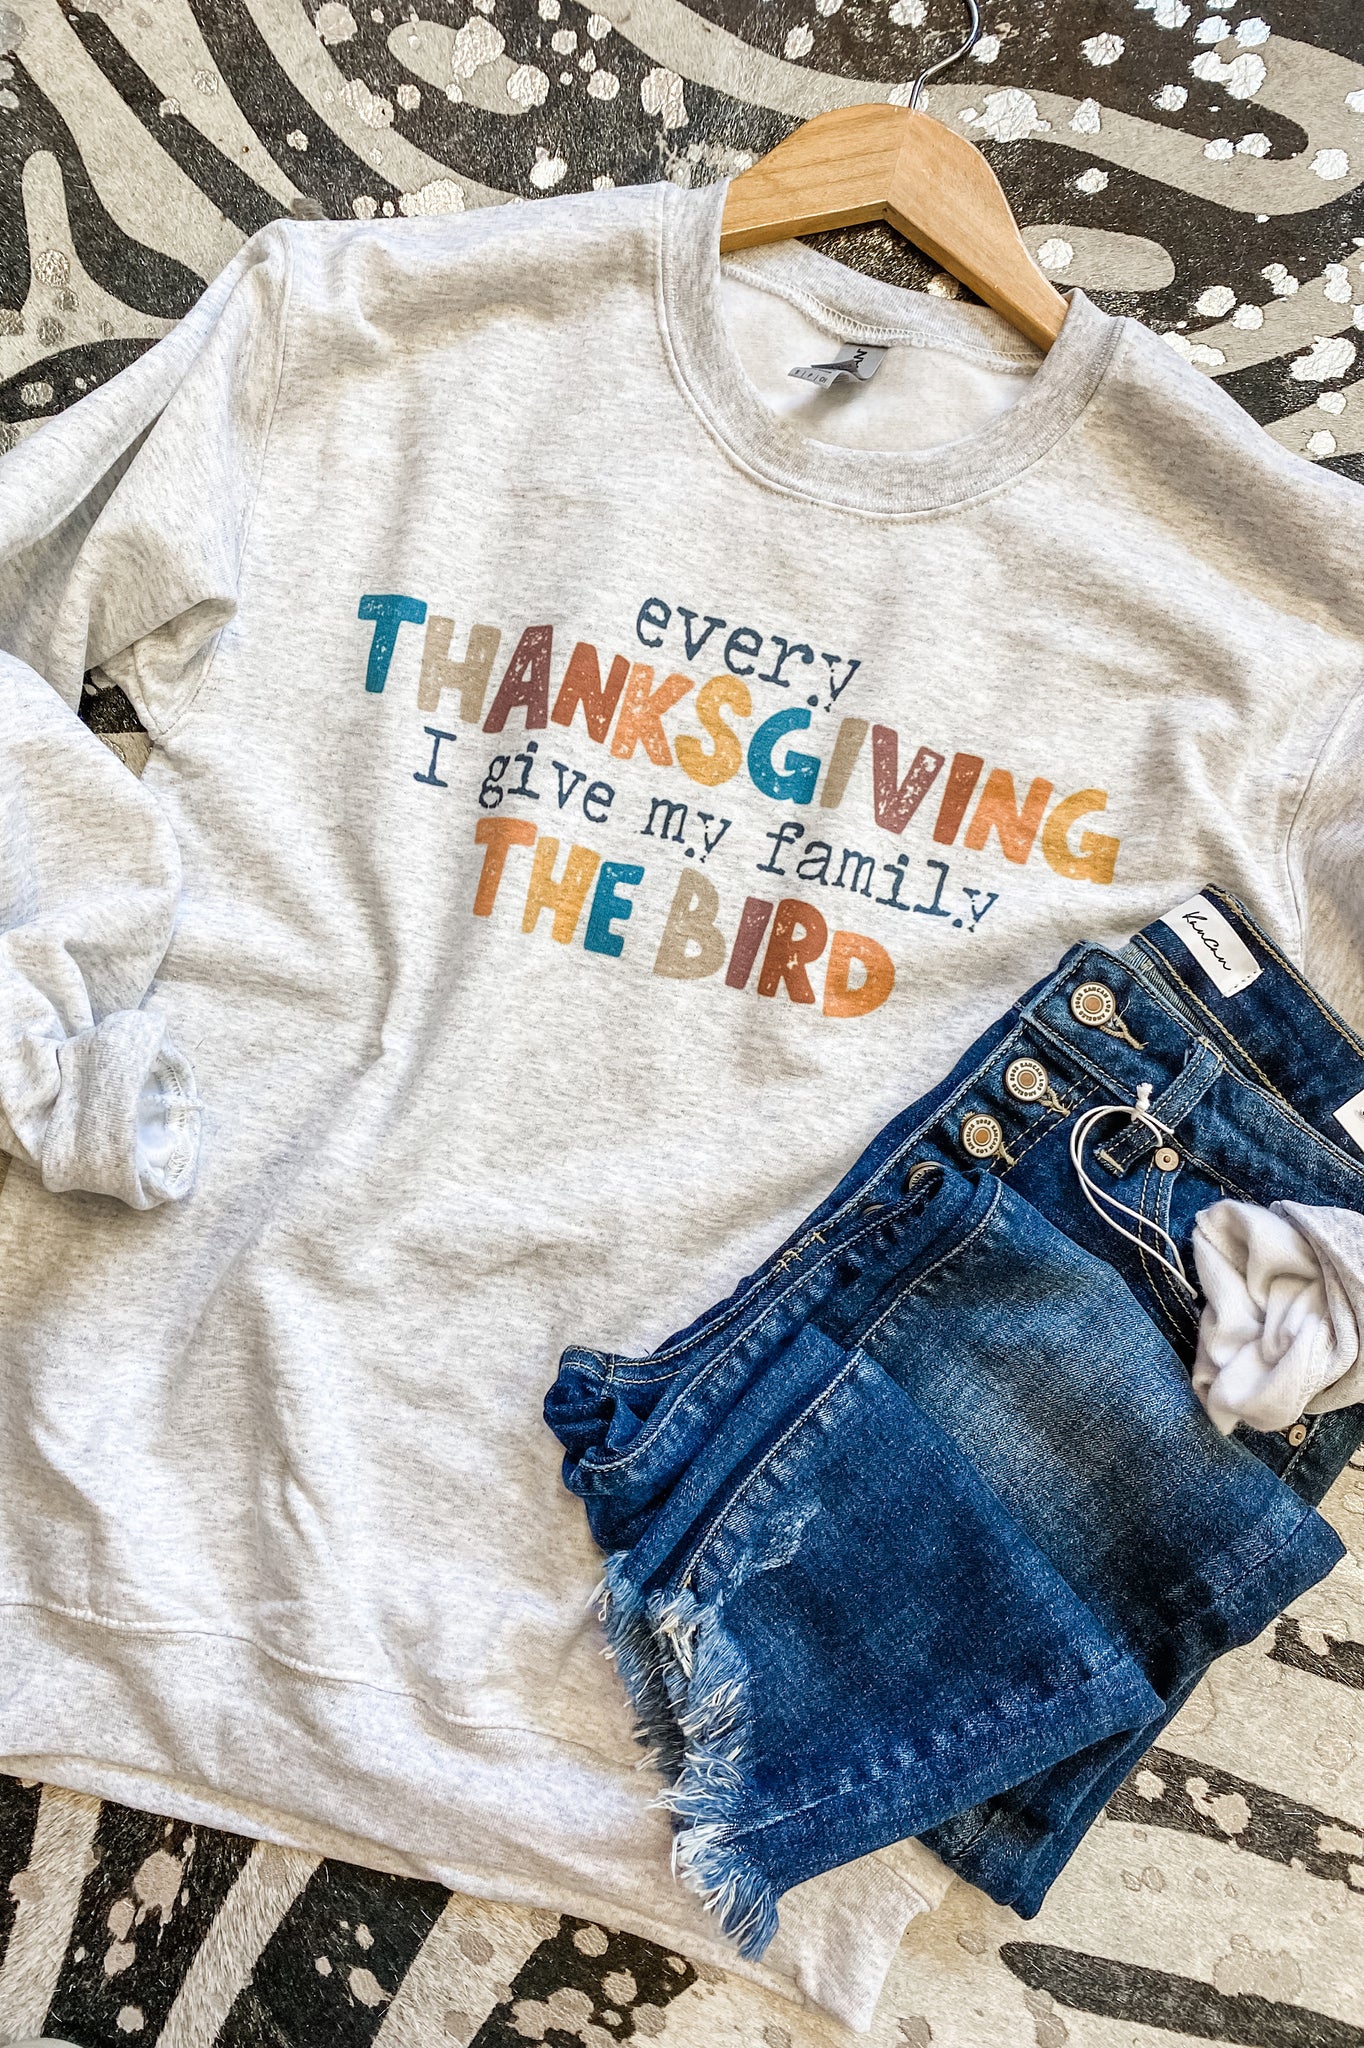 Give My Family The Bird Graphic Sweatshirt